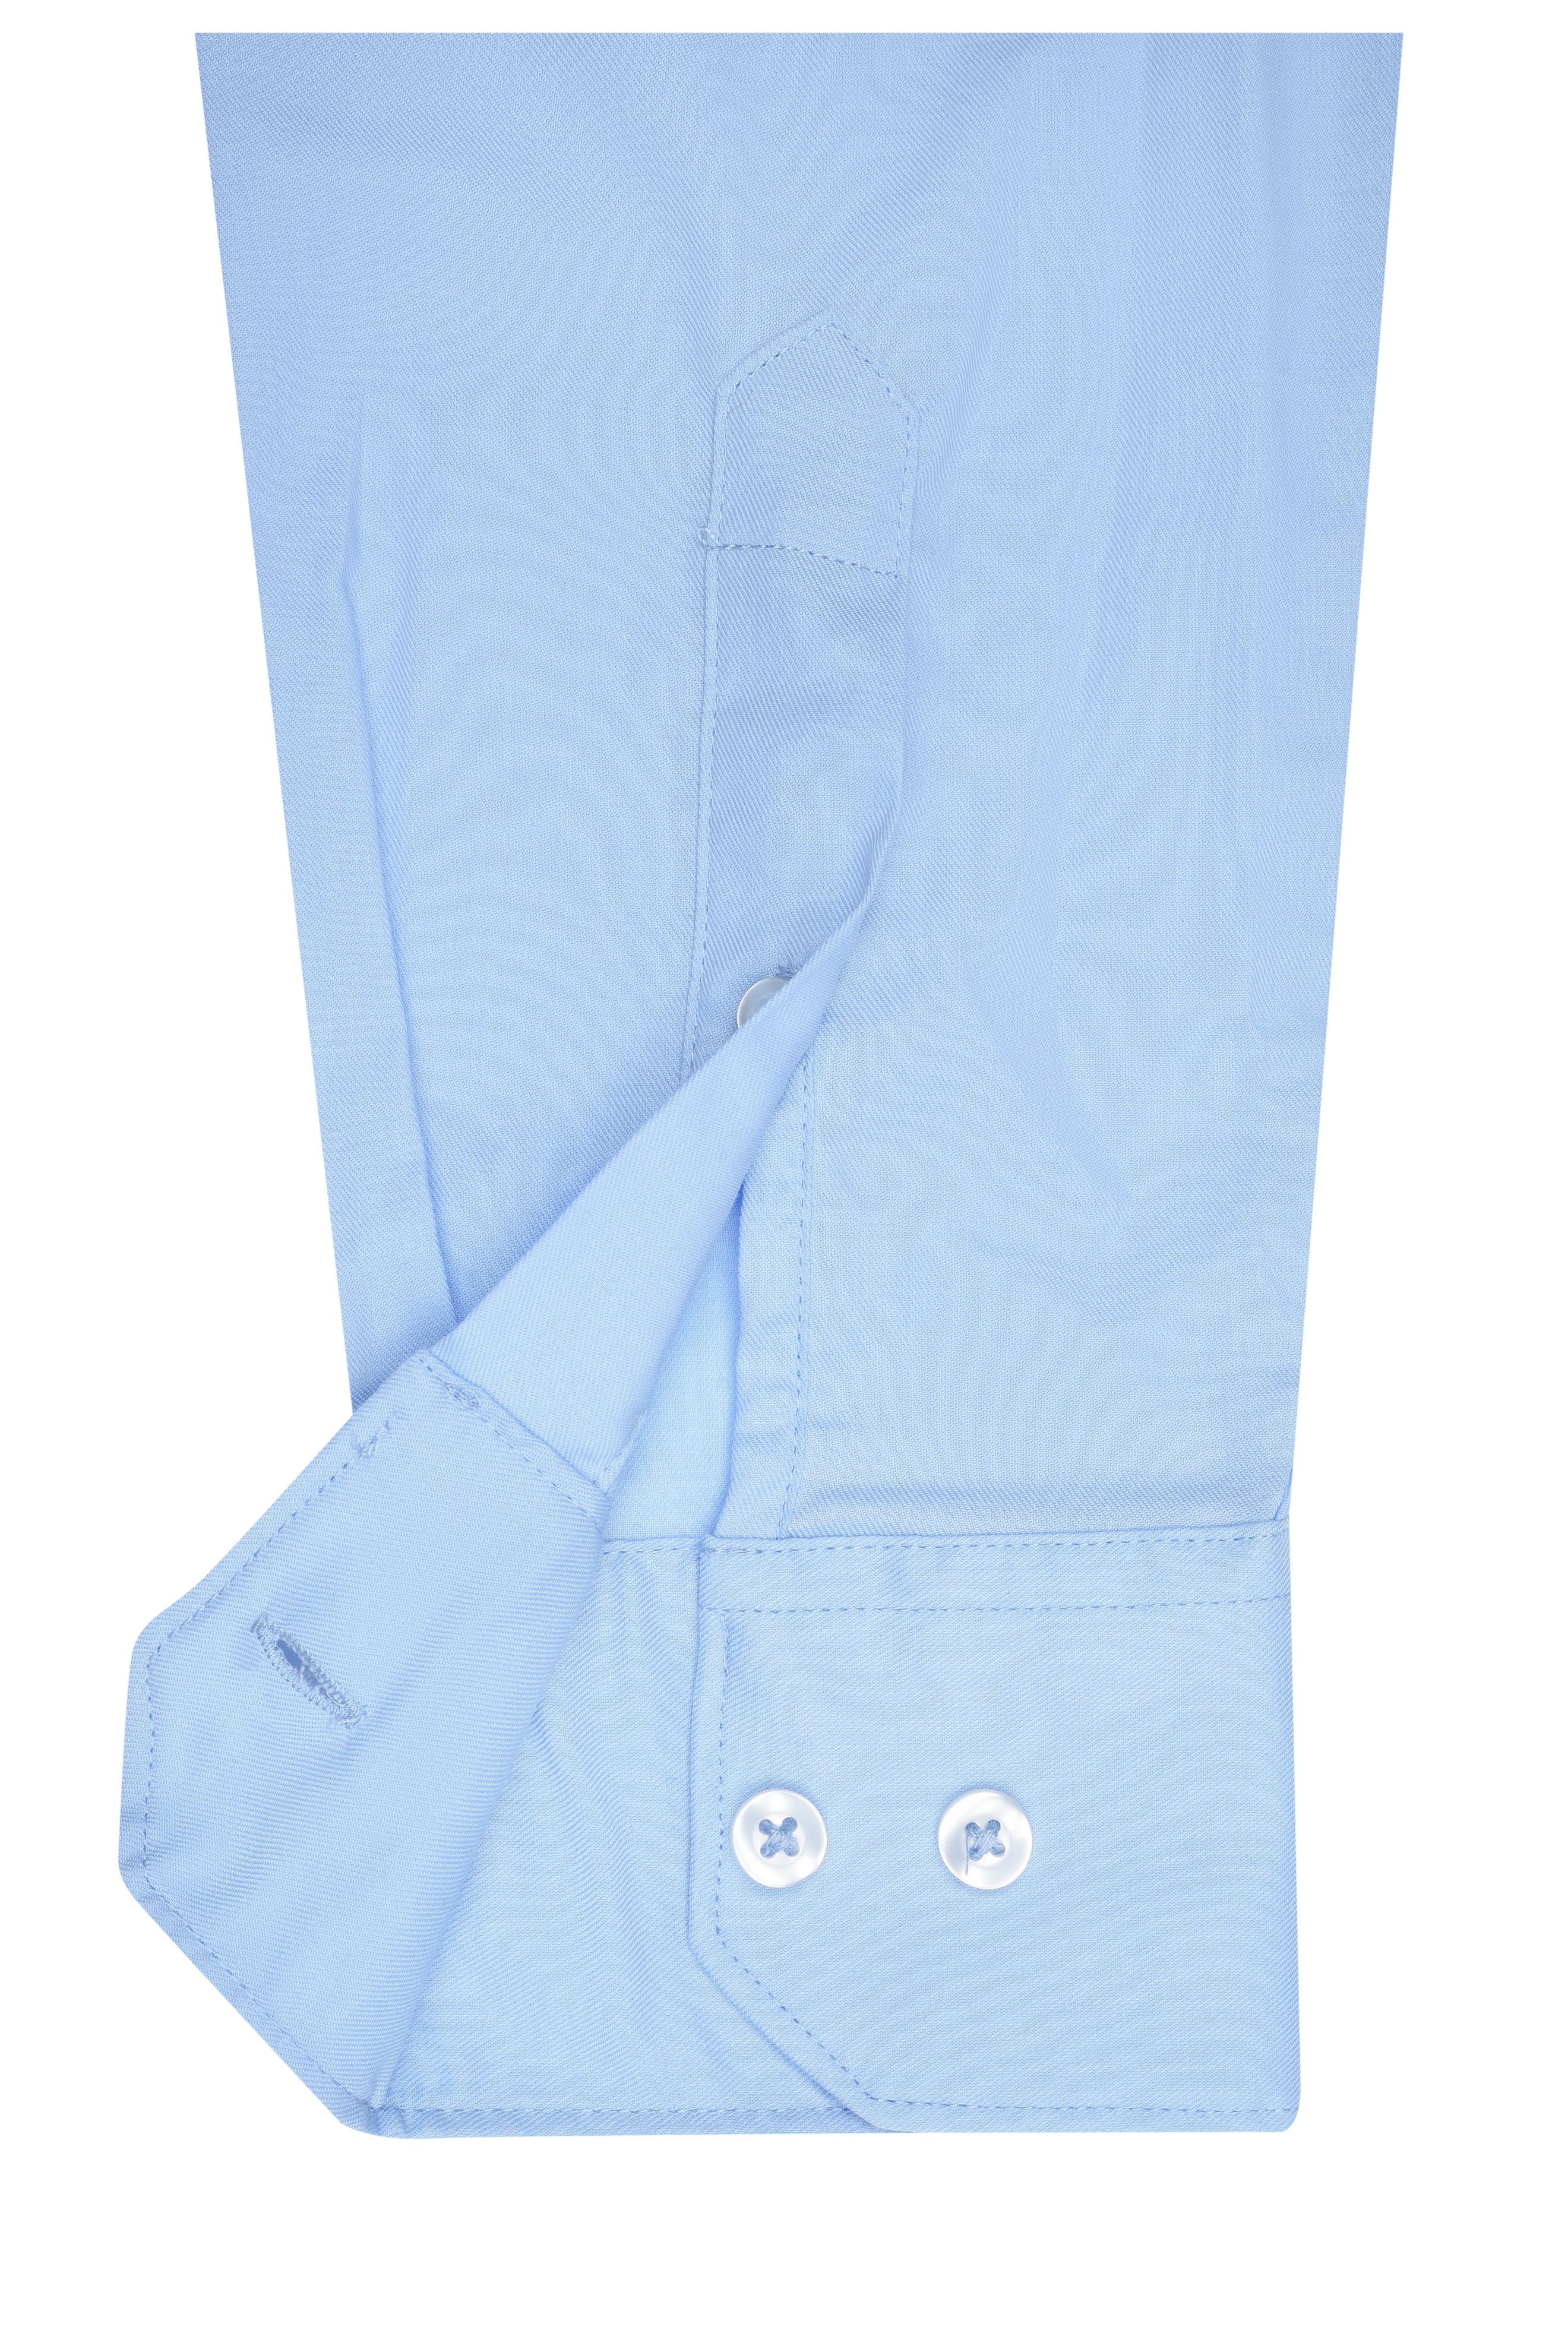 Men's Shirt Longsleeve Micro-Twill JN682 Klassisches Shirt in pflegeleichter Baumwollqualität